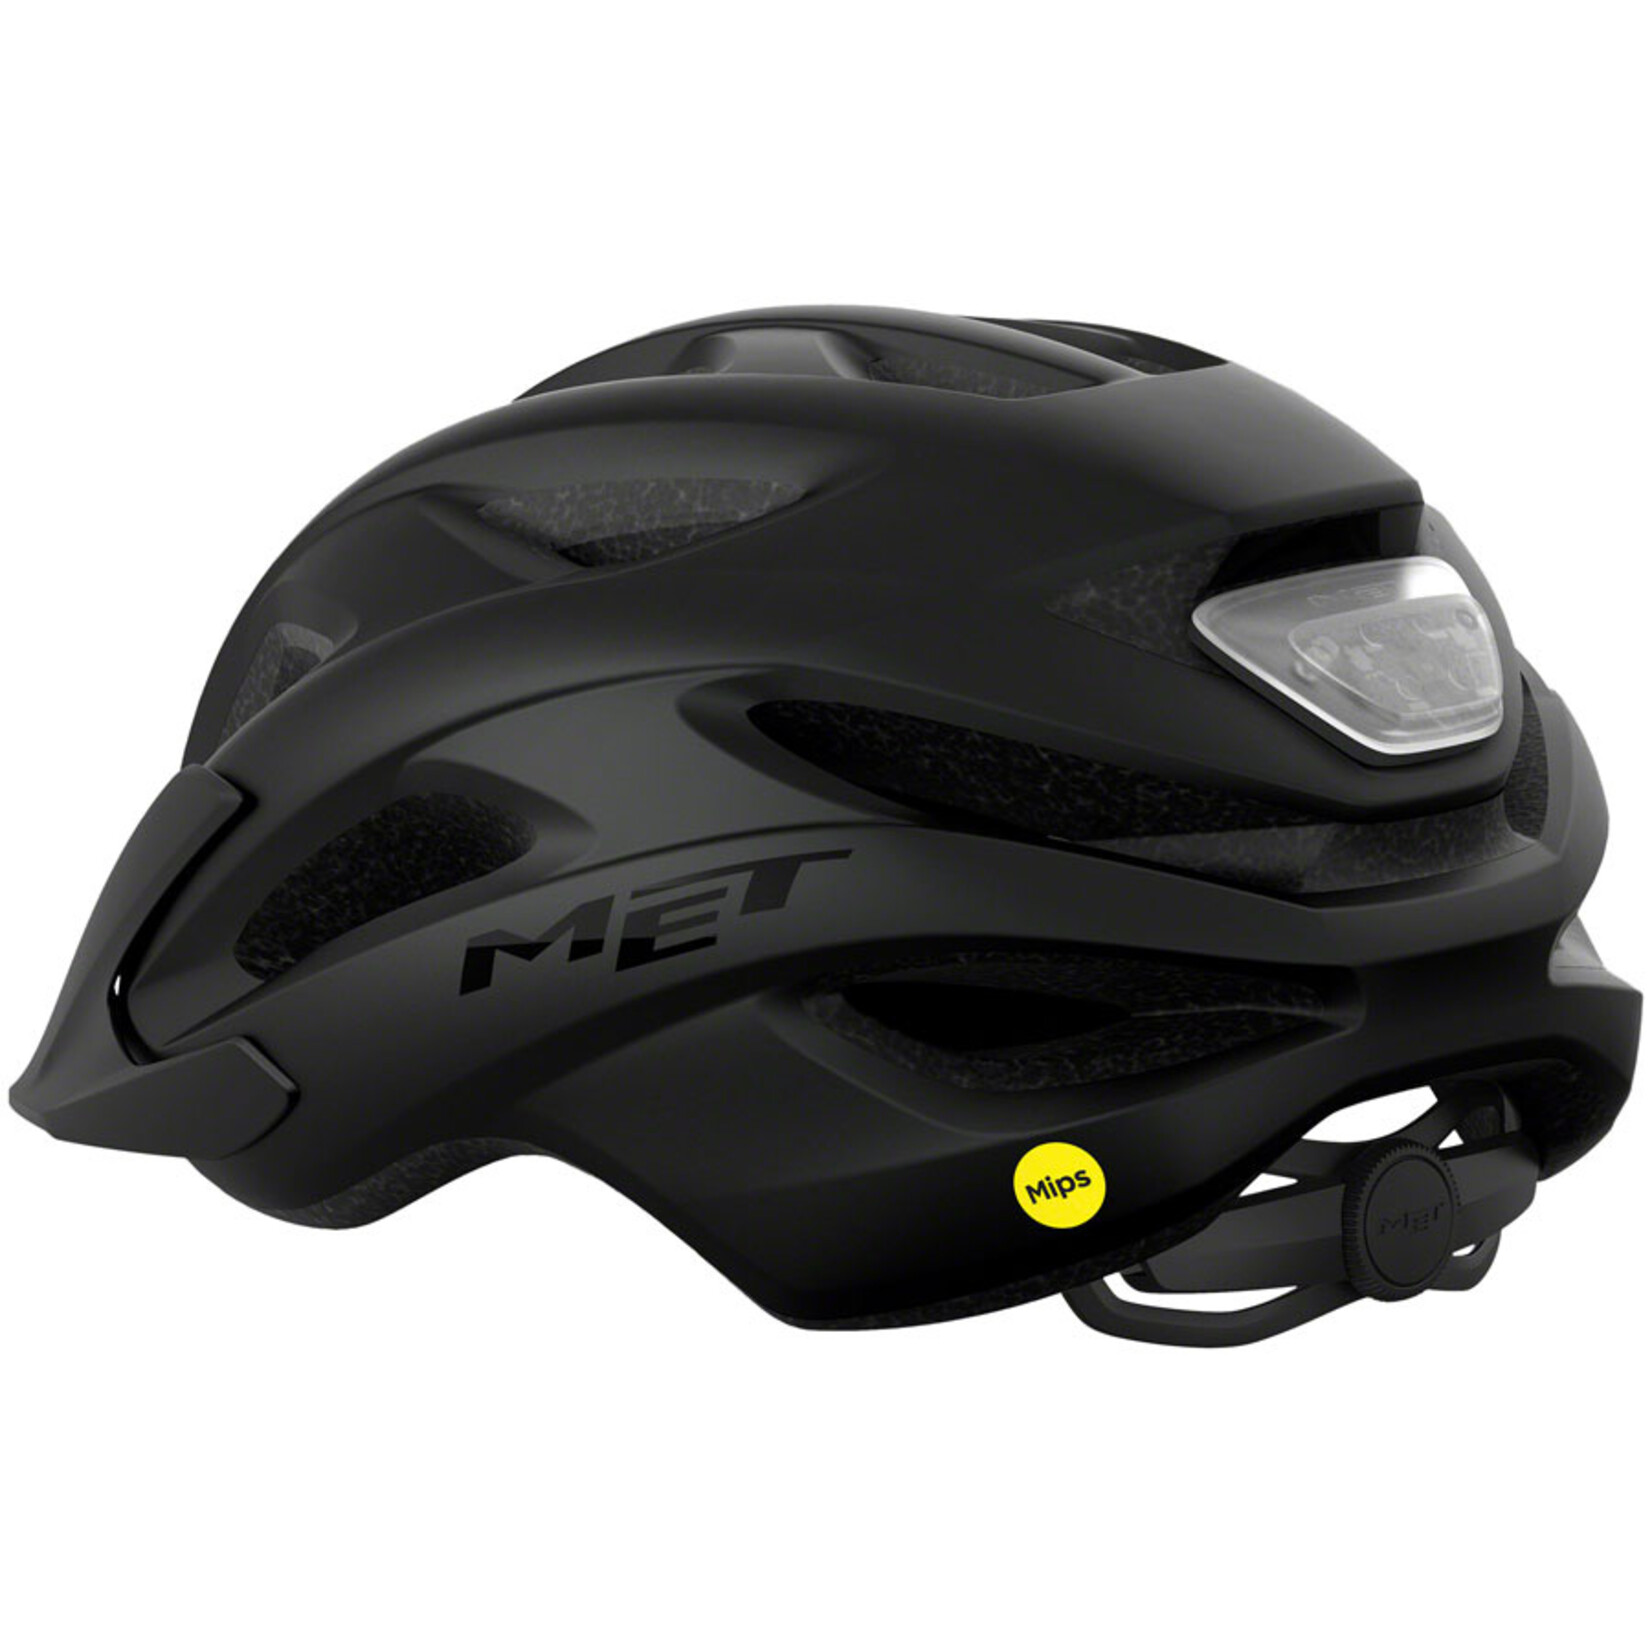 MET Helmets MET Crossover MIPS Helmet - Black, One Size